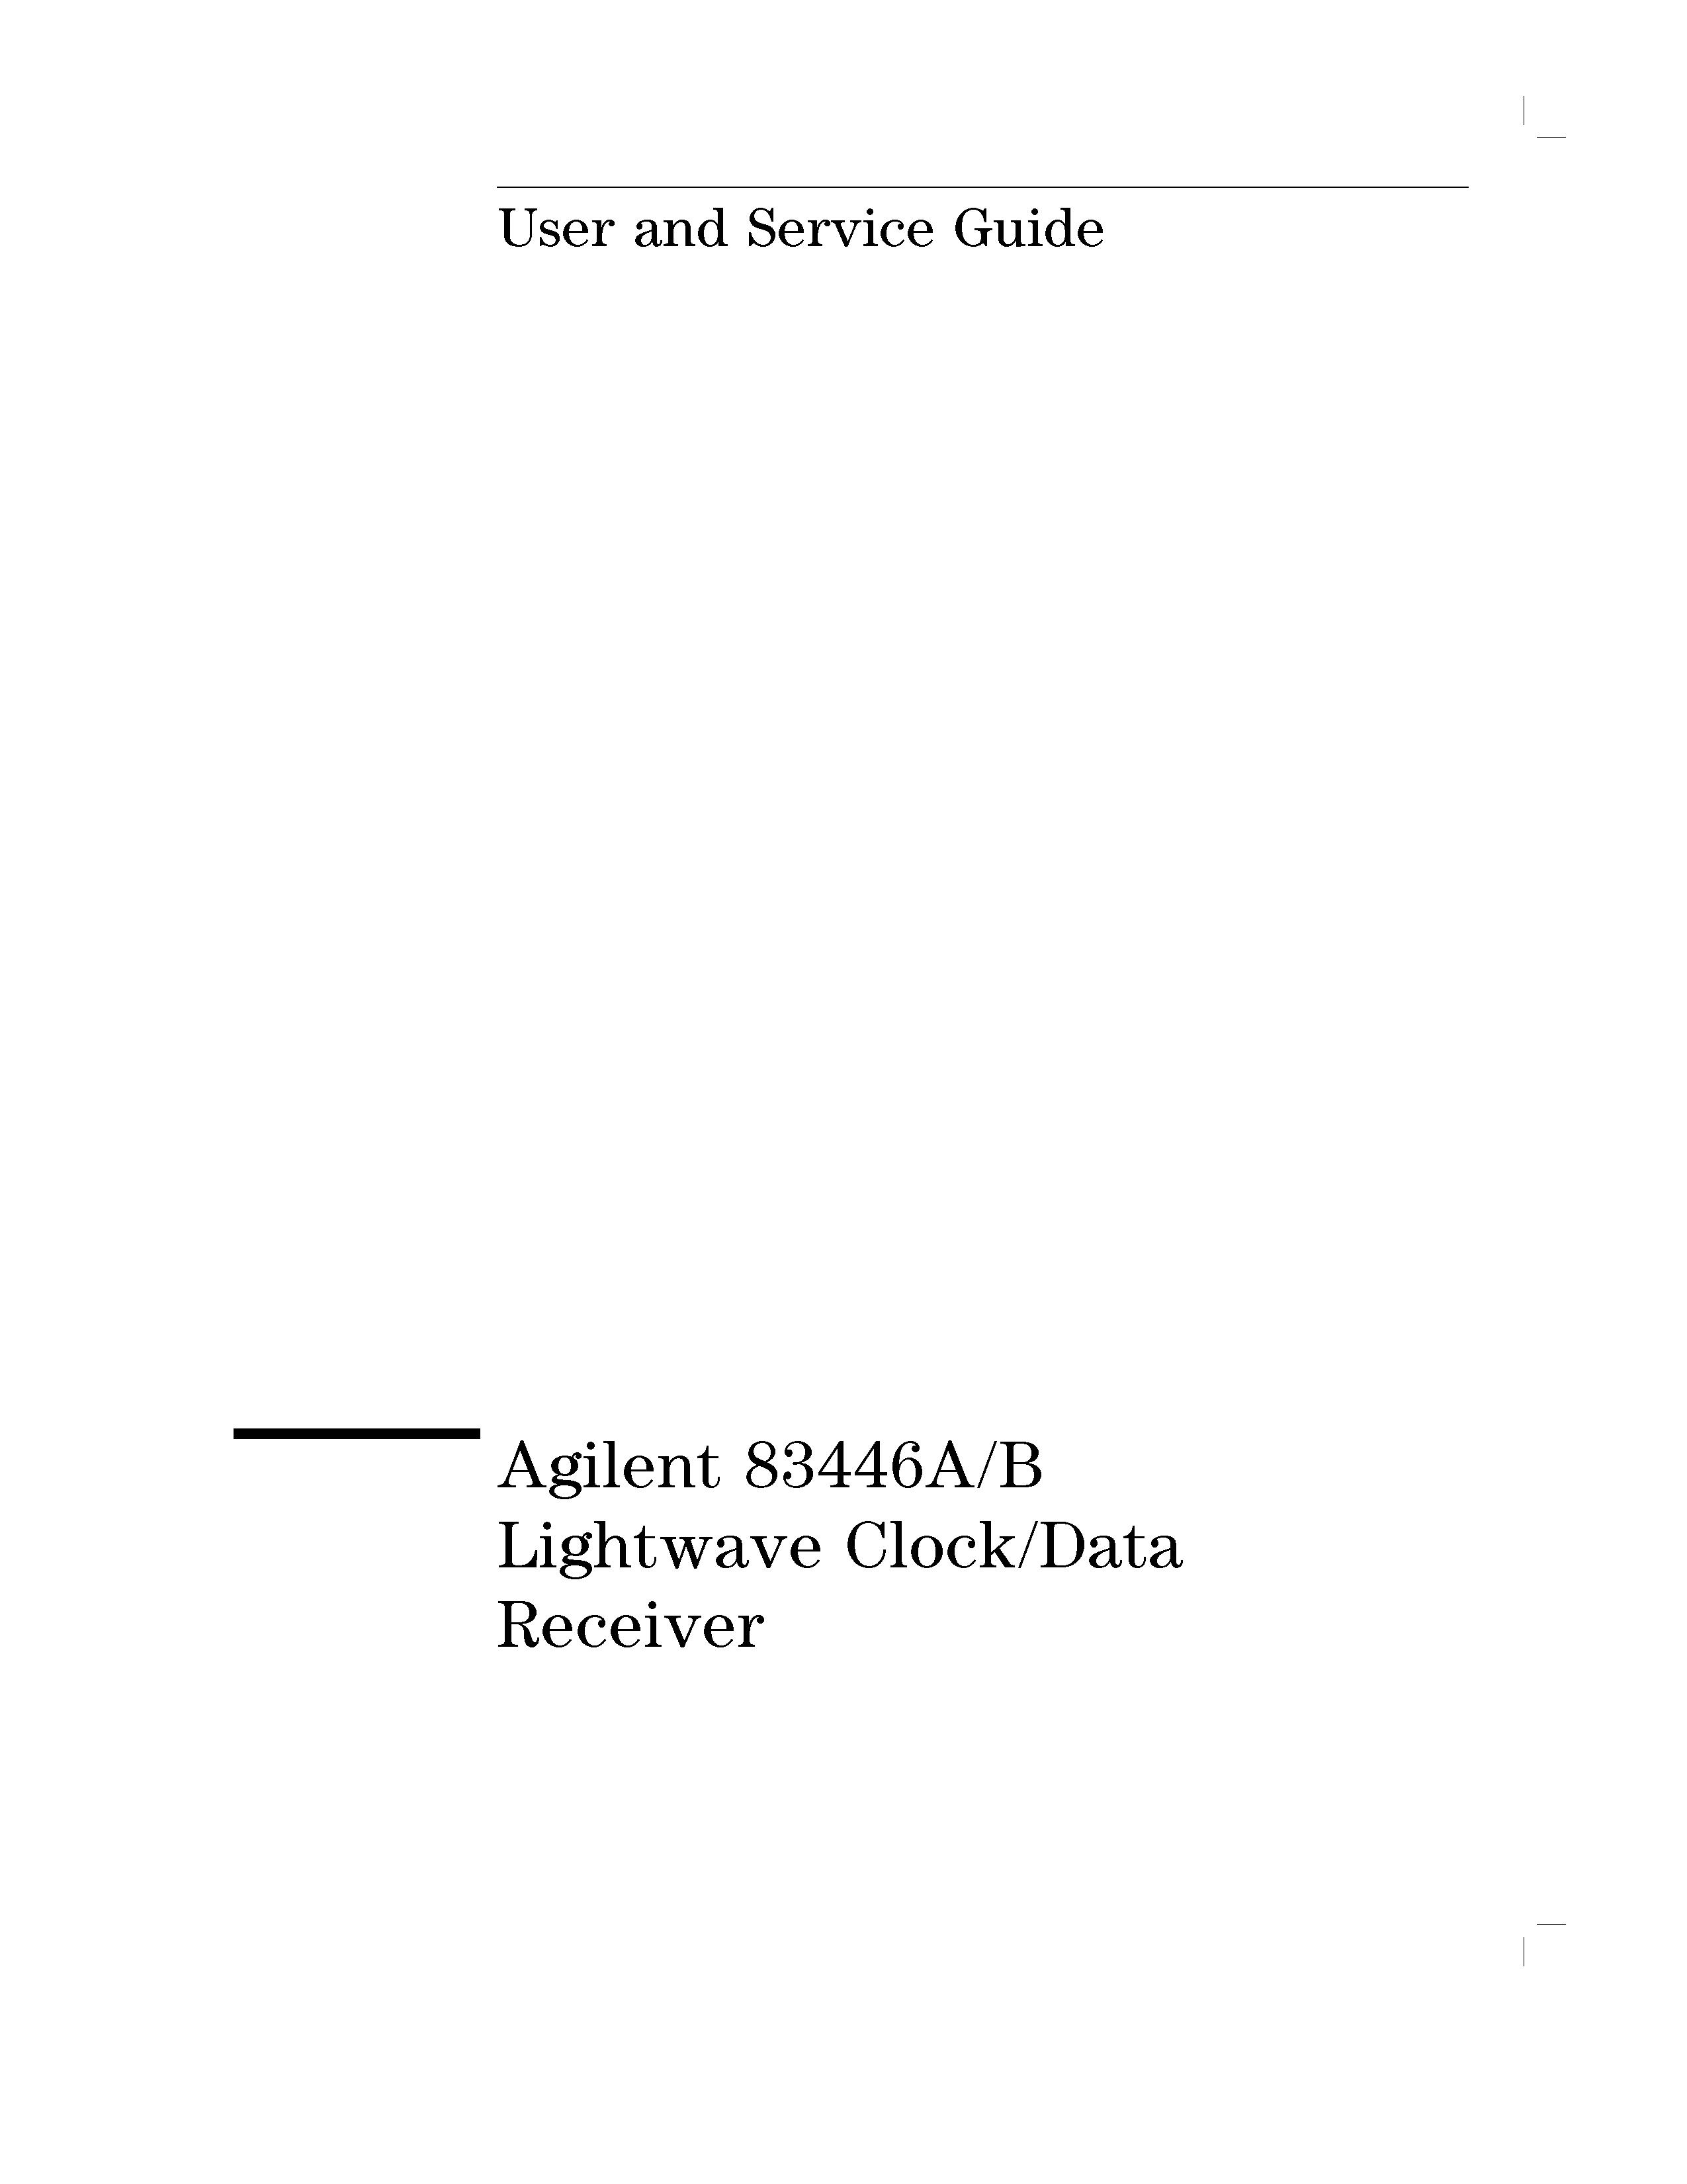 Agilent Technologies 83446A Clock Radio User Manual